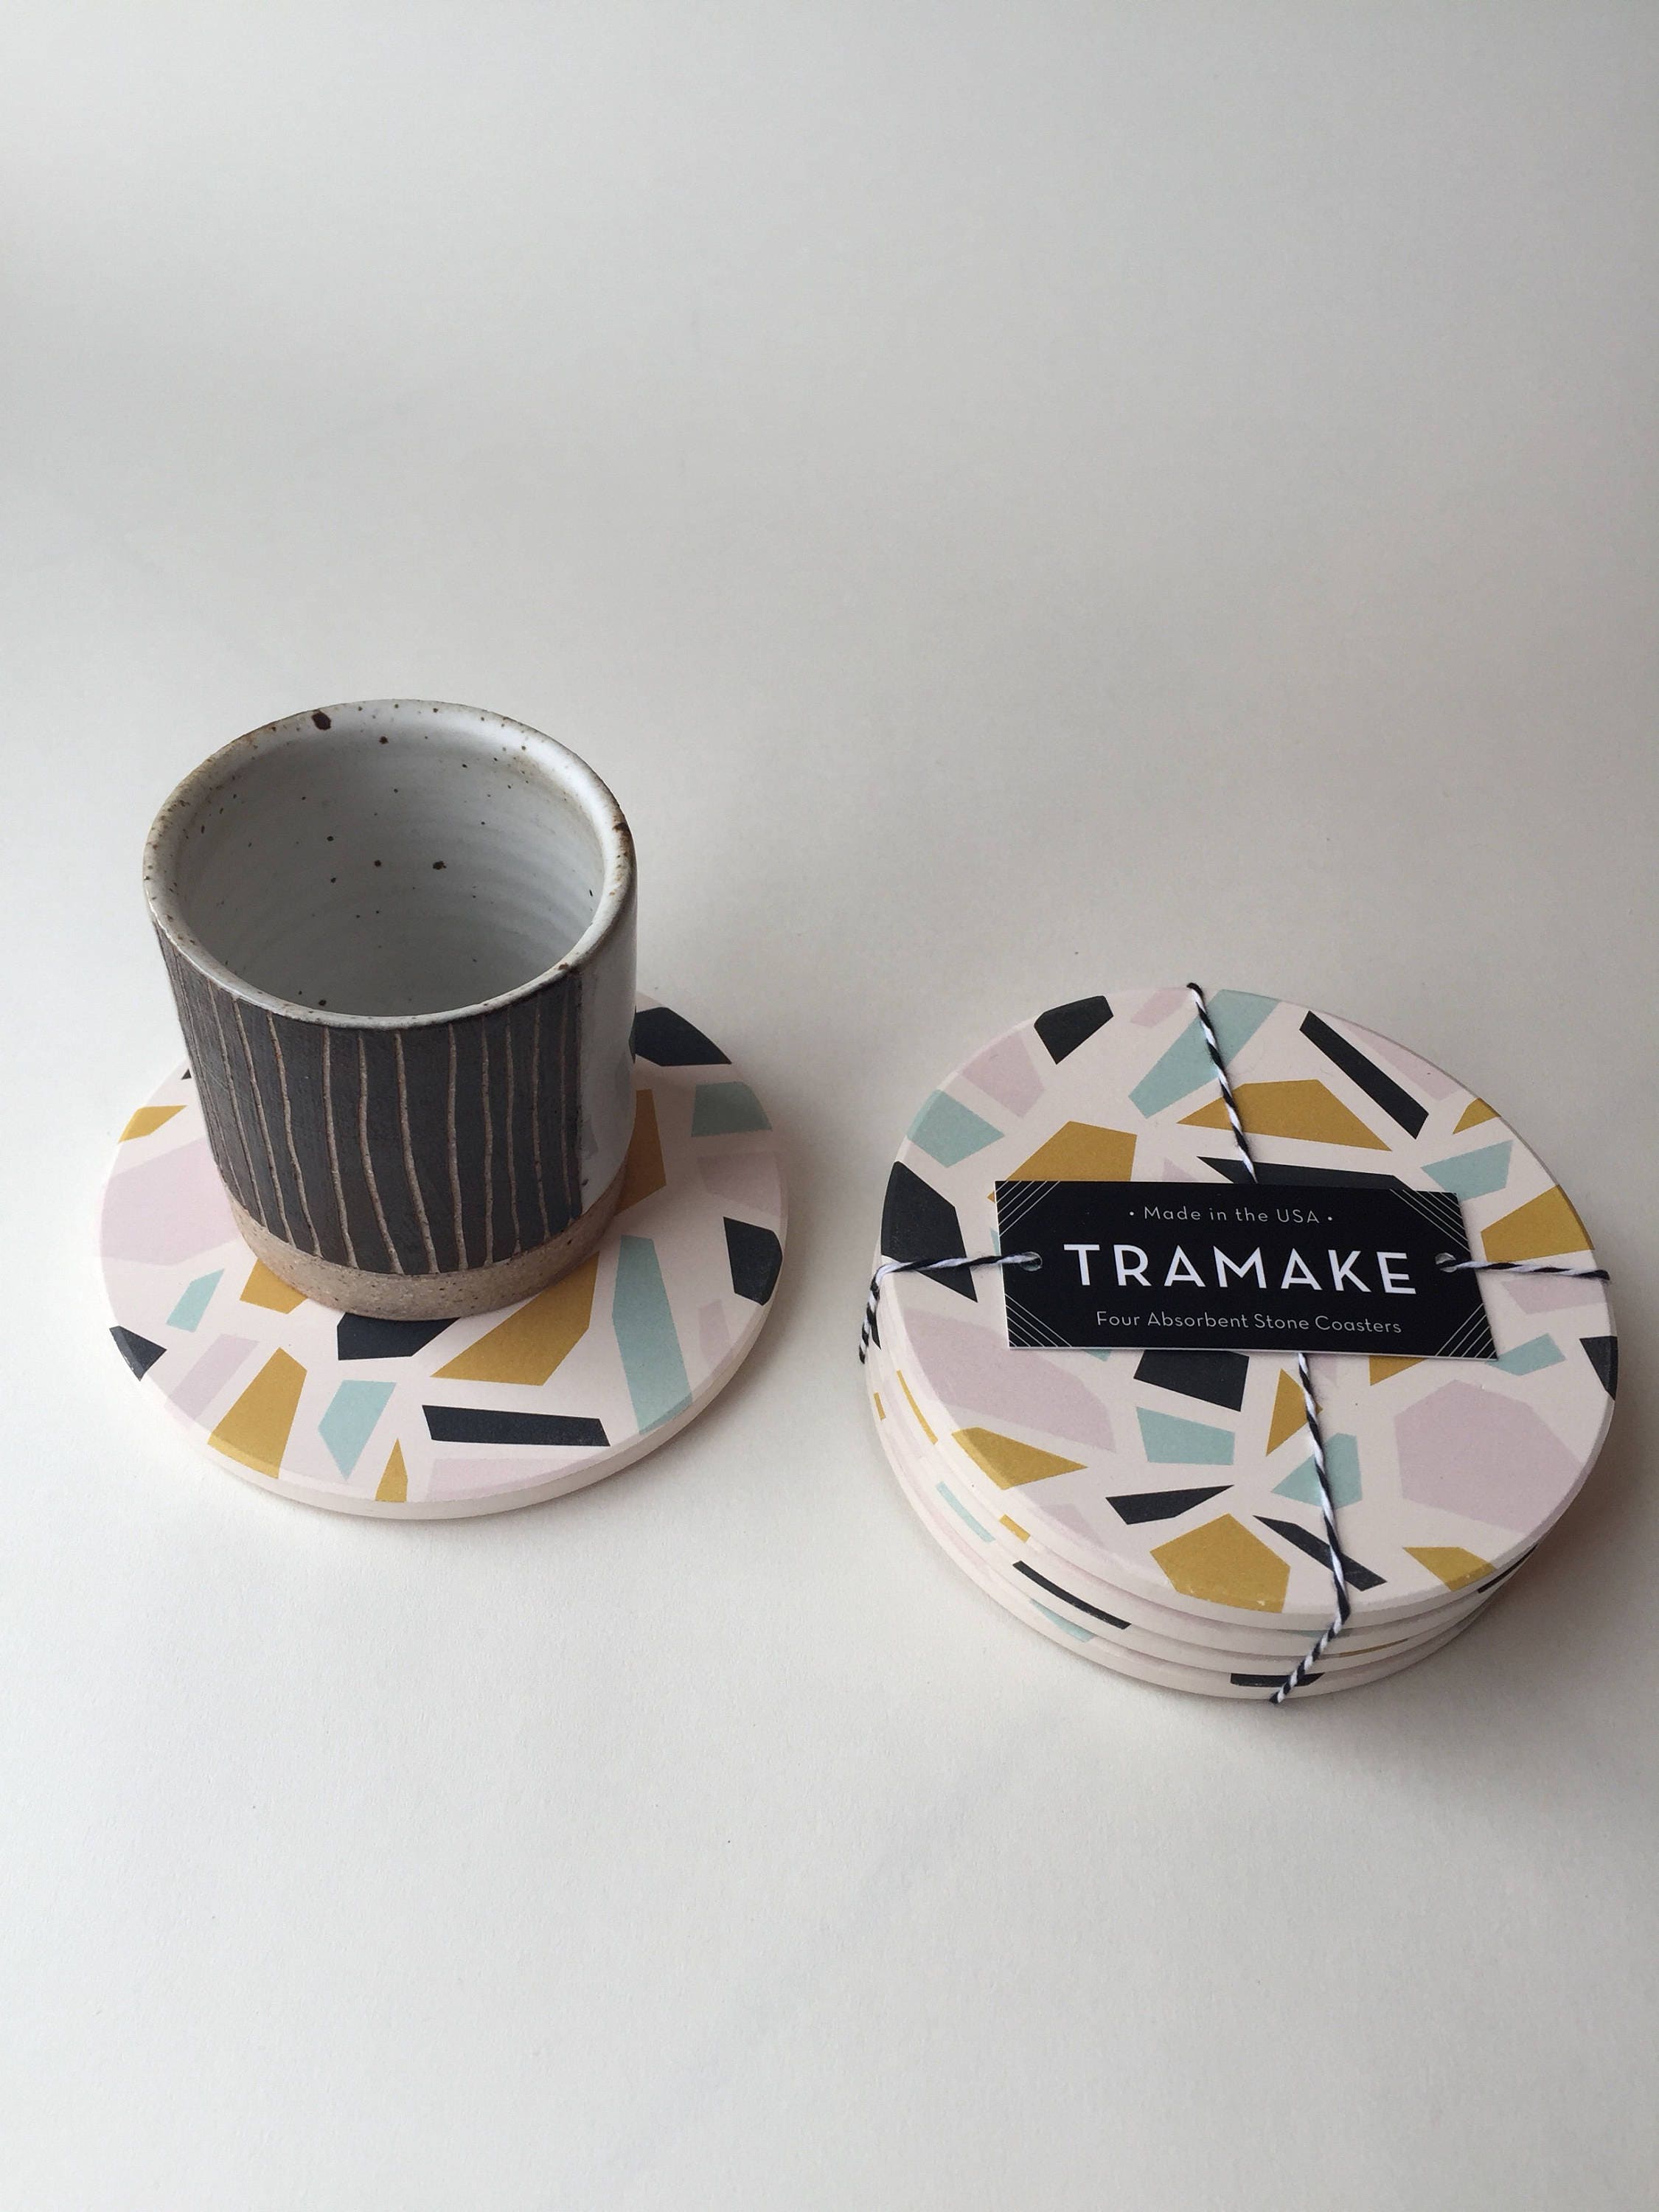 Squiggle Ceramic Coasters, Tramake